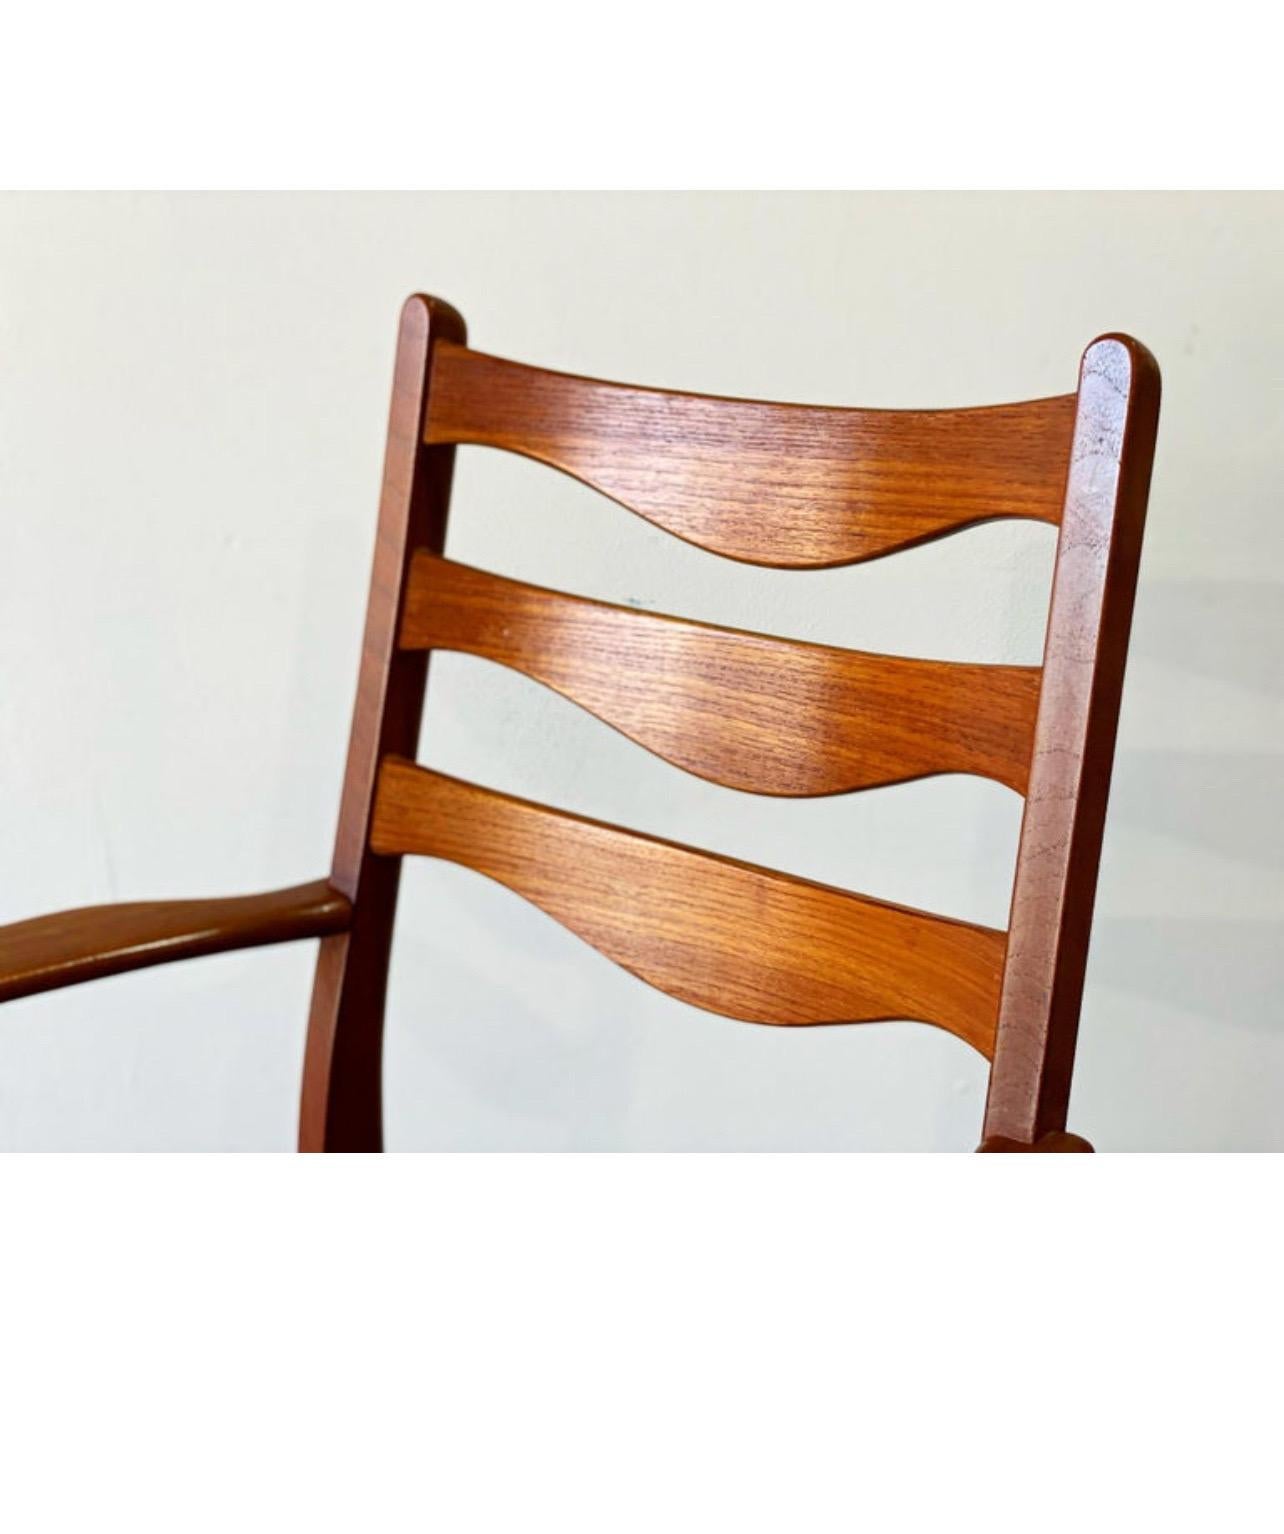  Set of 8, Midcentury Danish Modern by Arne Wahl Iversen Dining Chairs in Teak For Sale 8